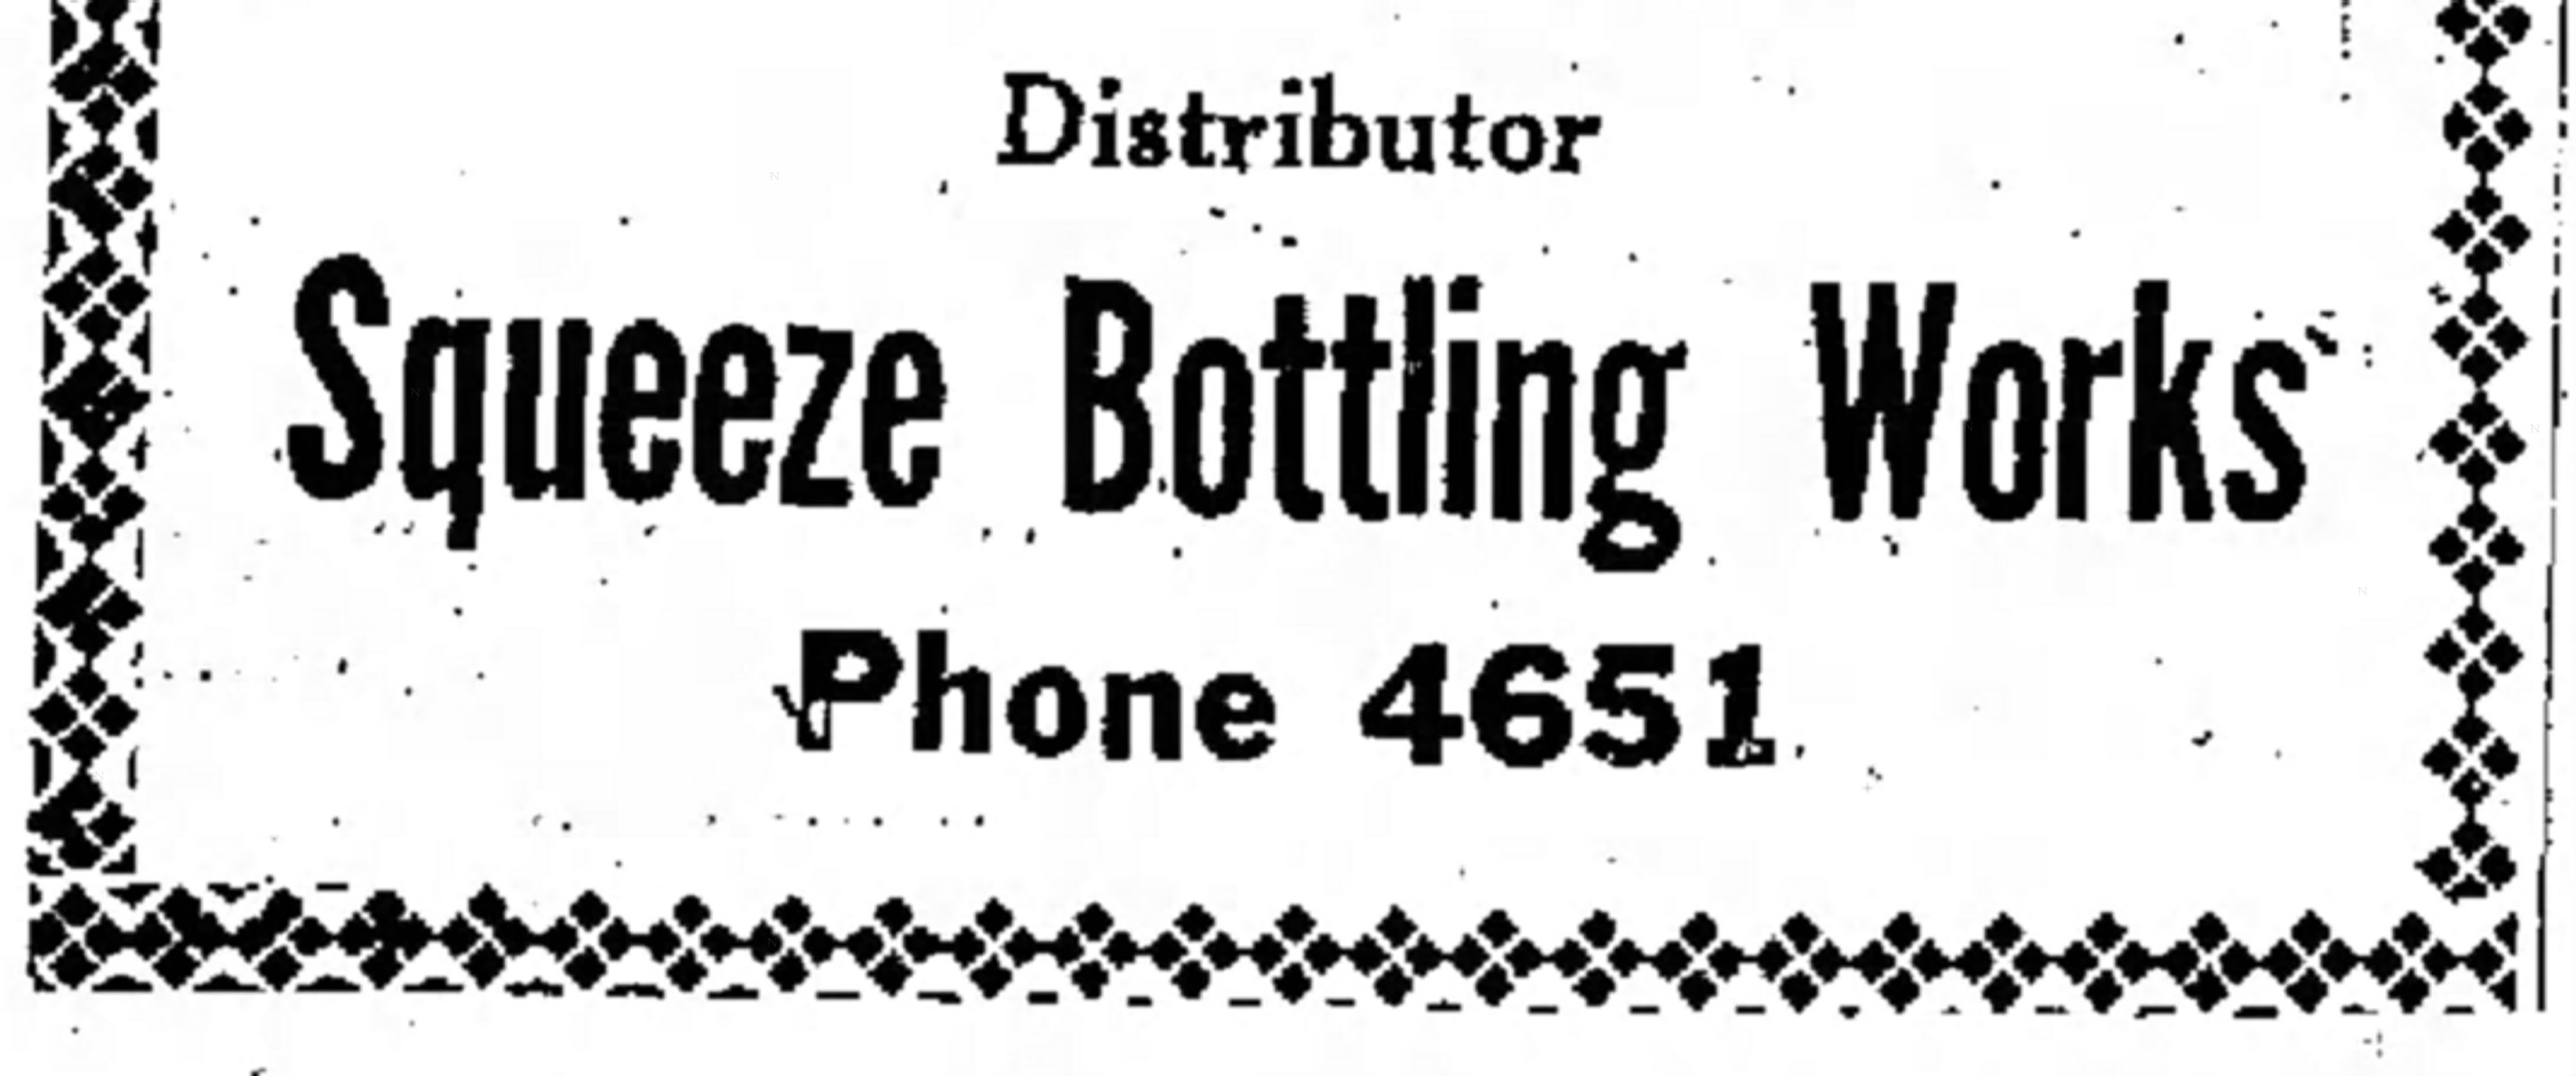 Squeeze Bottling 1931 New Phone Number The_Kokomo_Tribune_Tue__Aug_11__1931.jpg